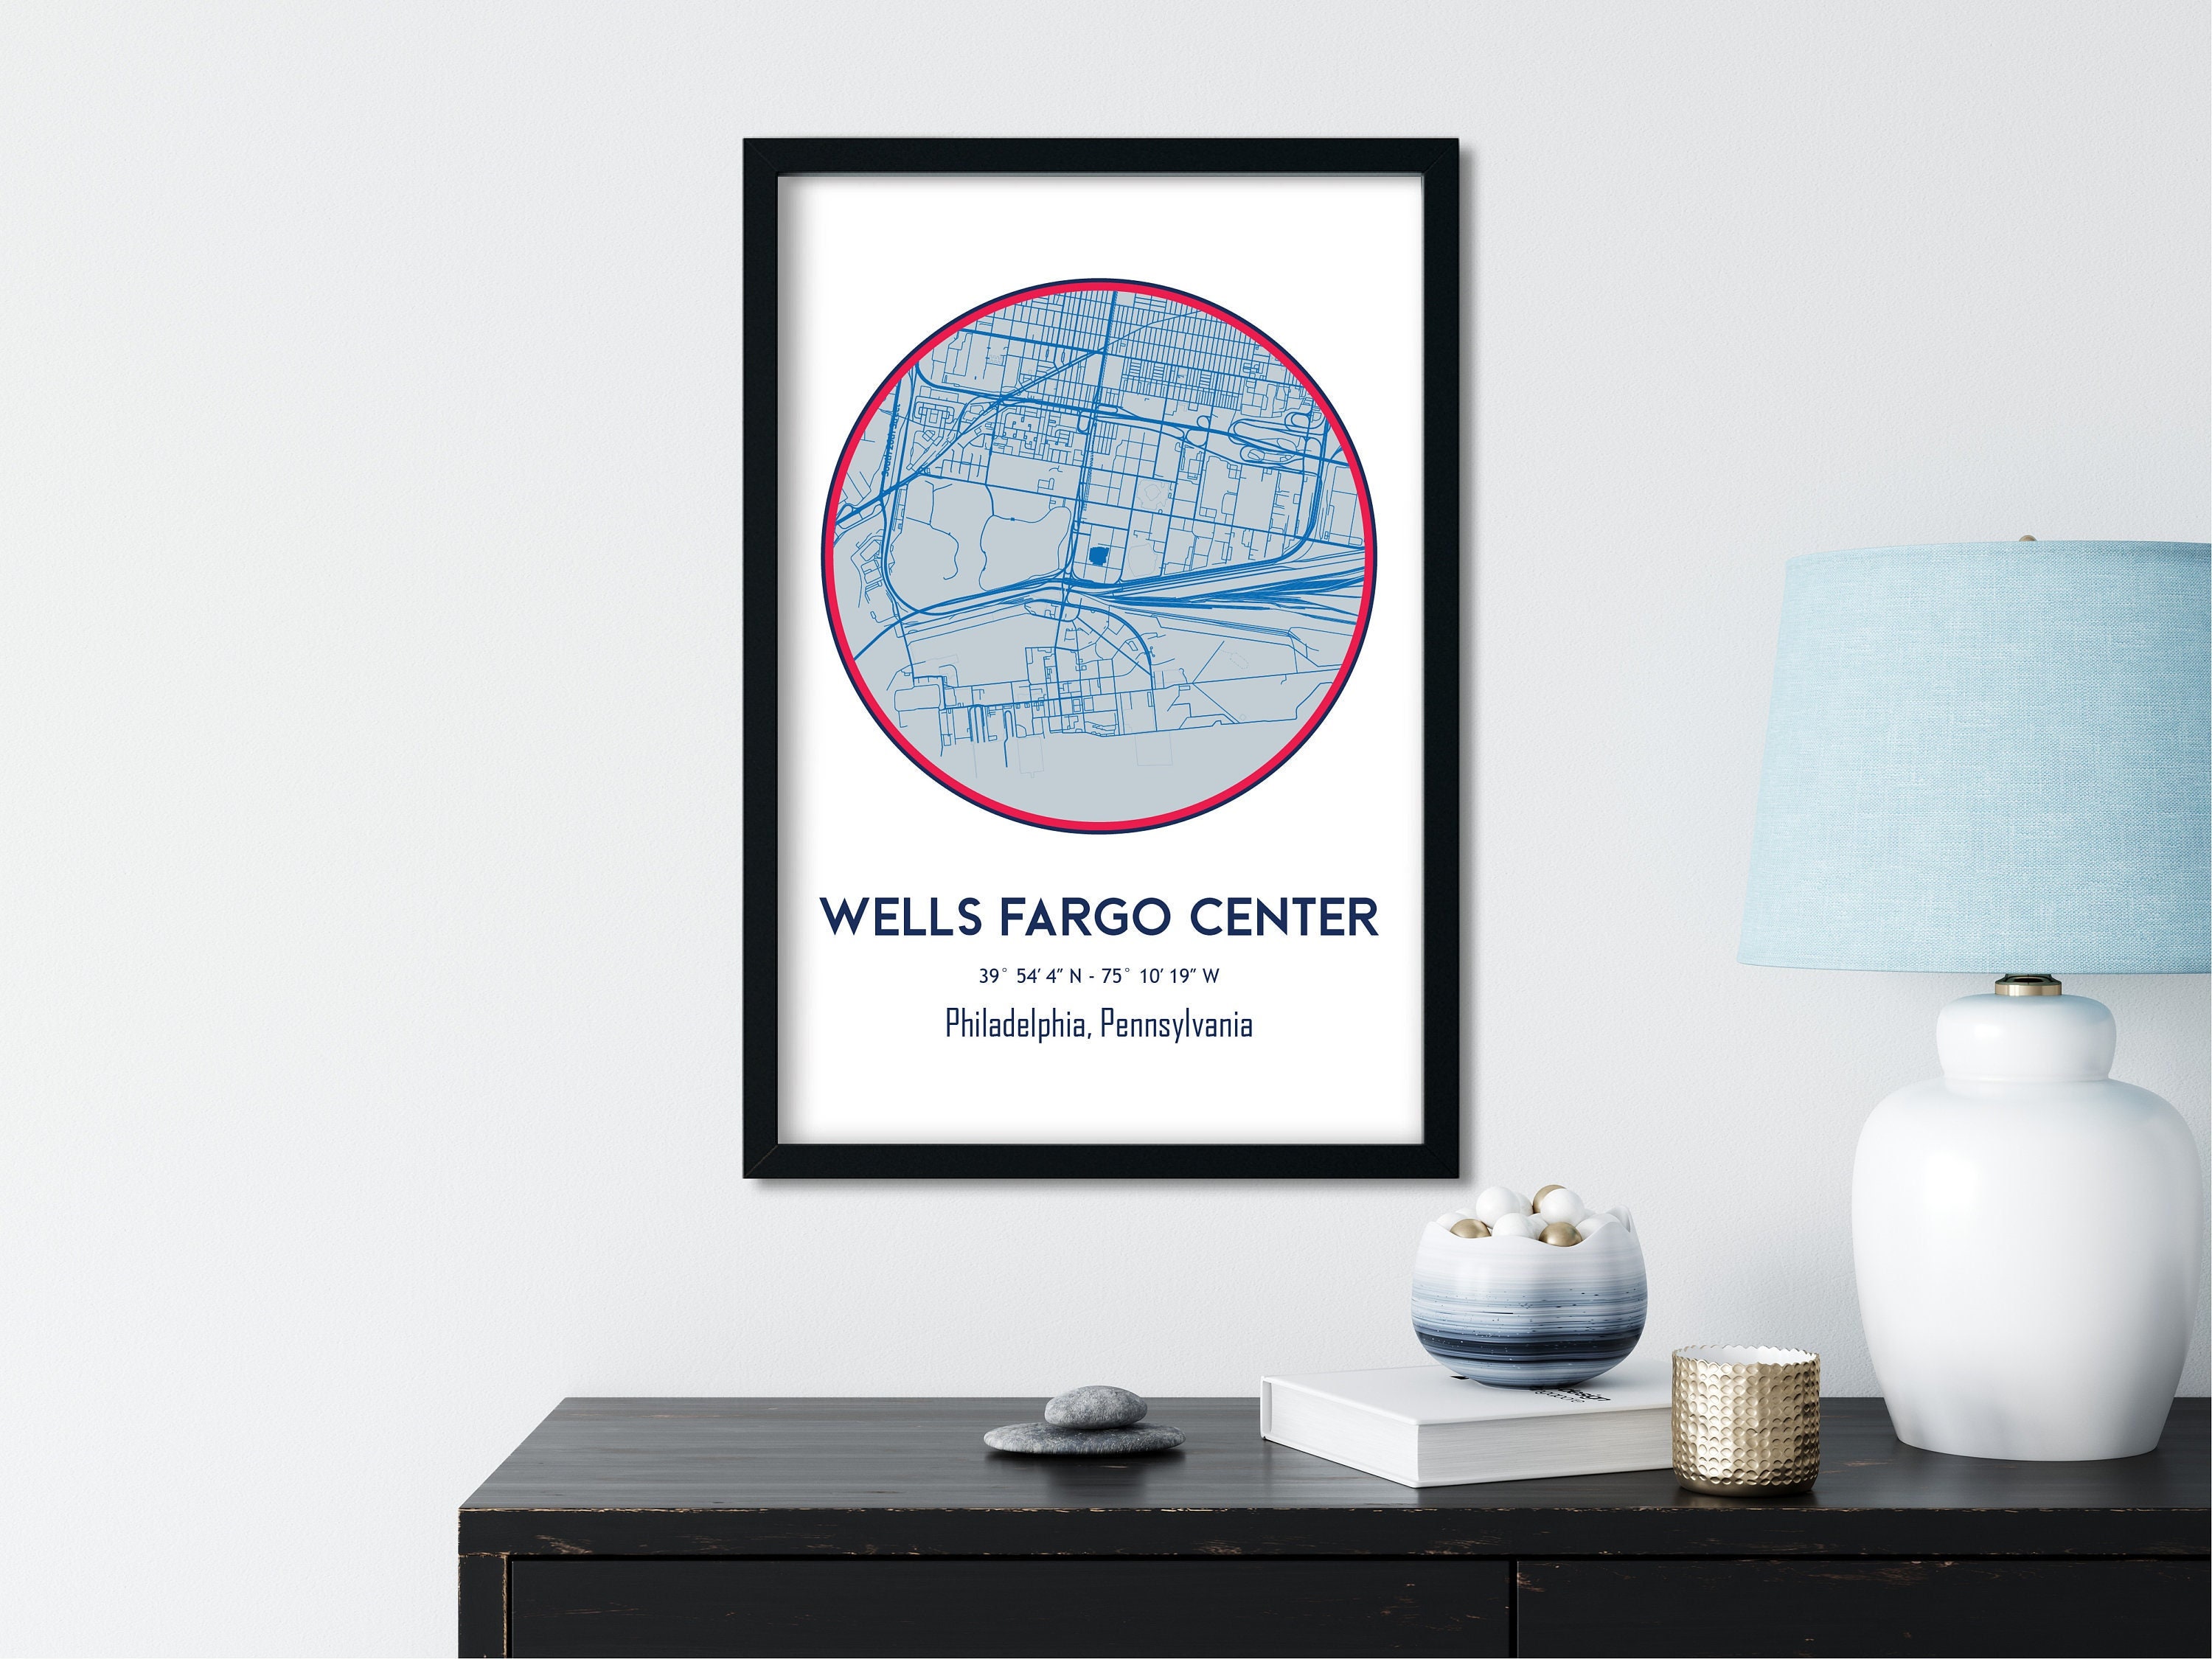 Philadelphia Flyers Wells Fargo Center 3D Wood Stadium Replica